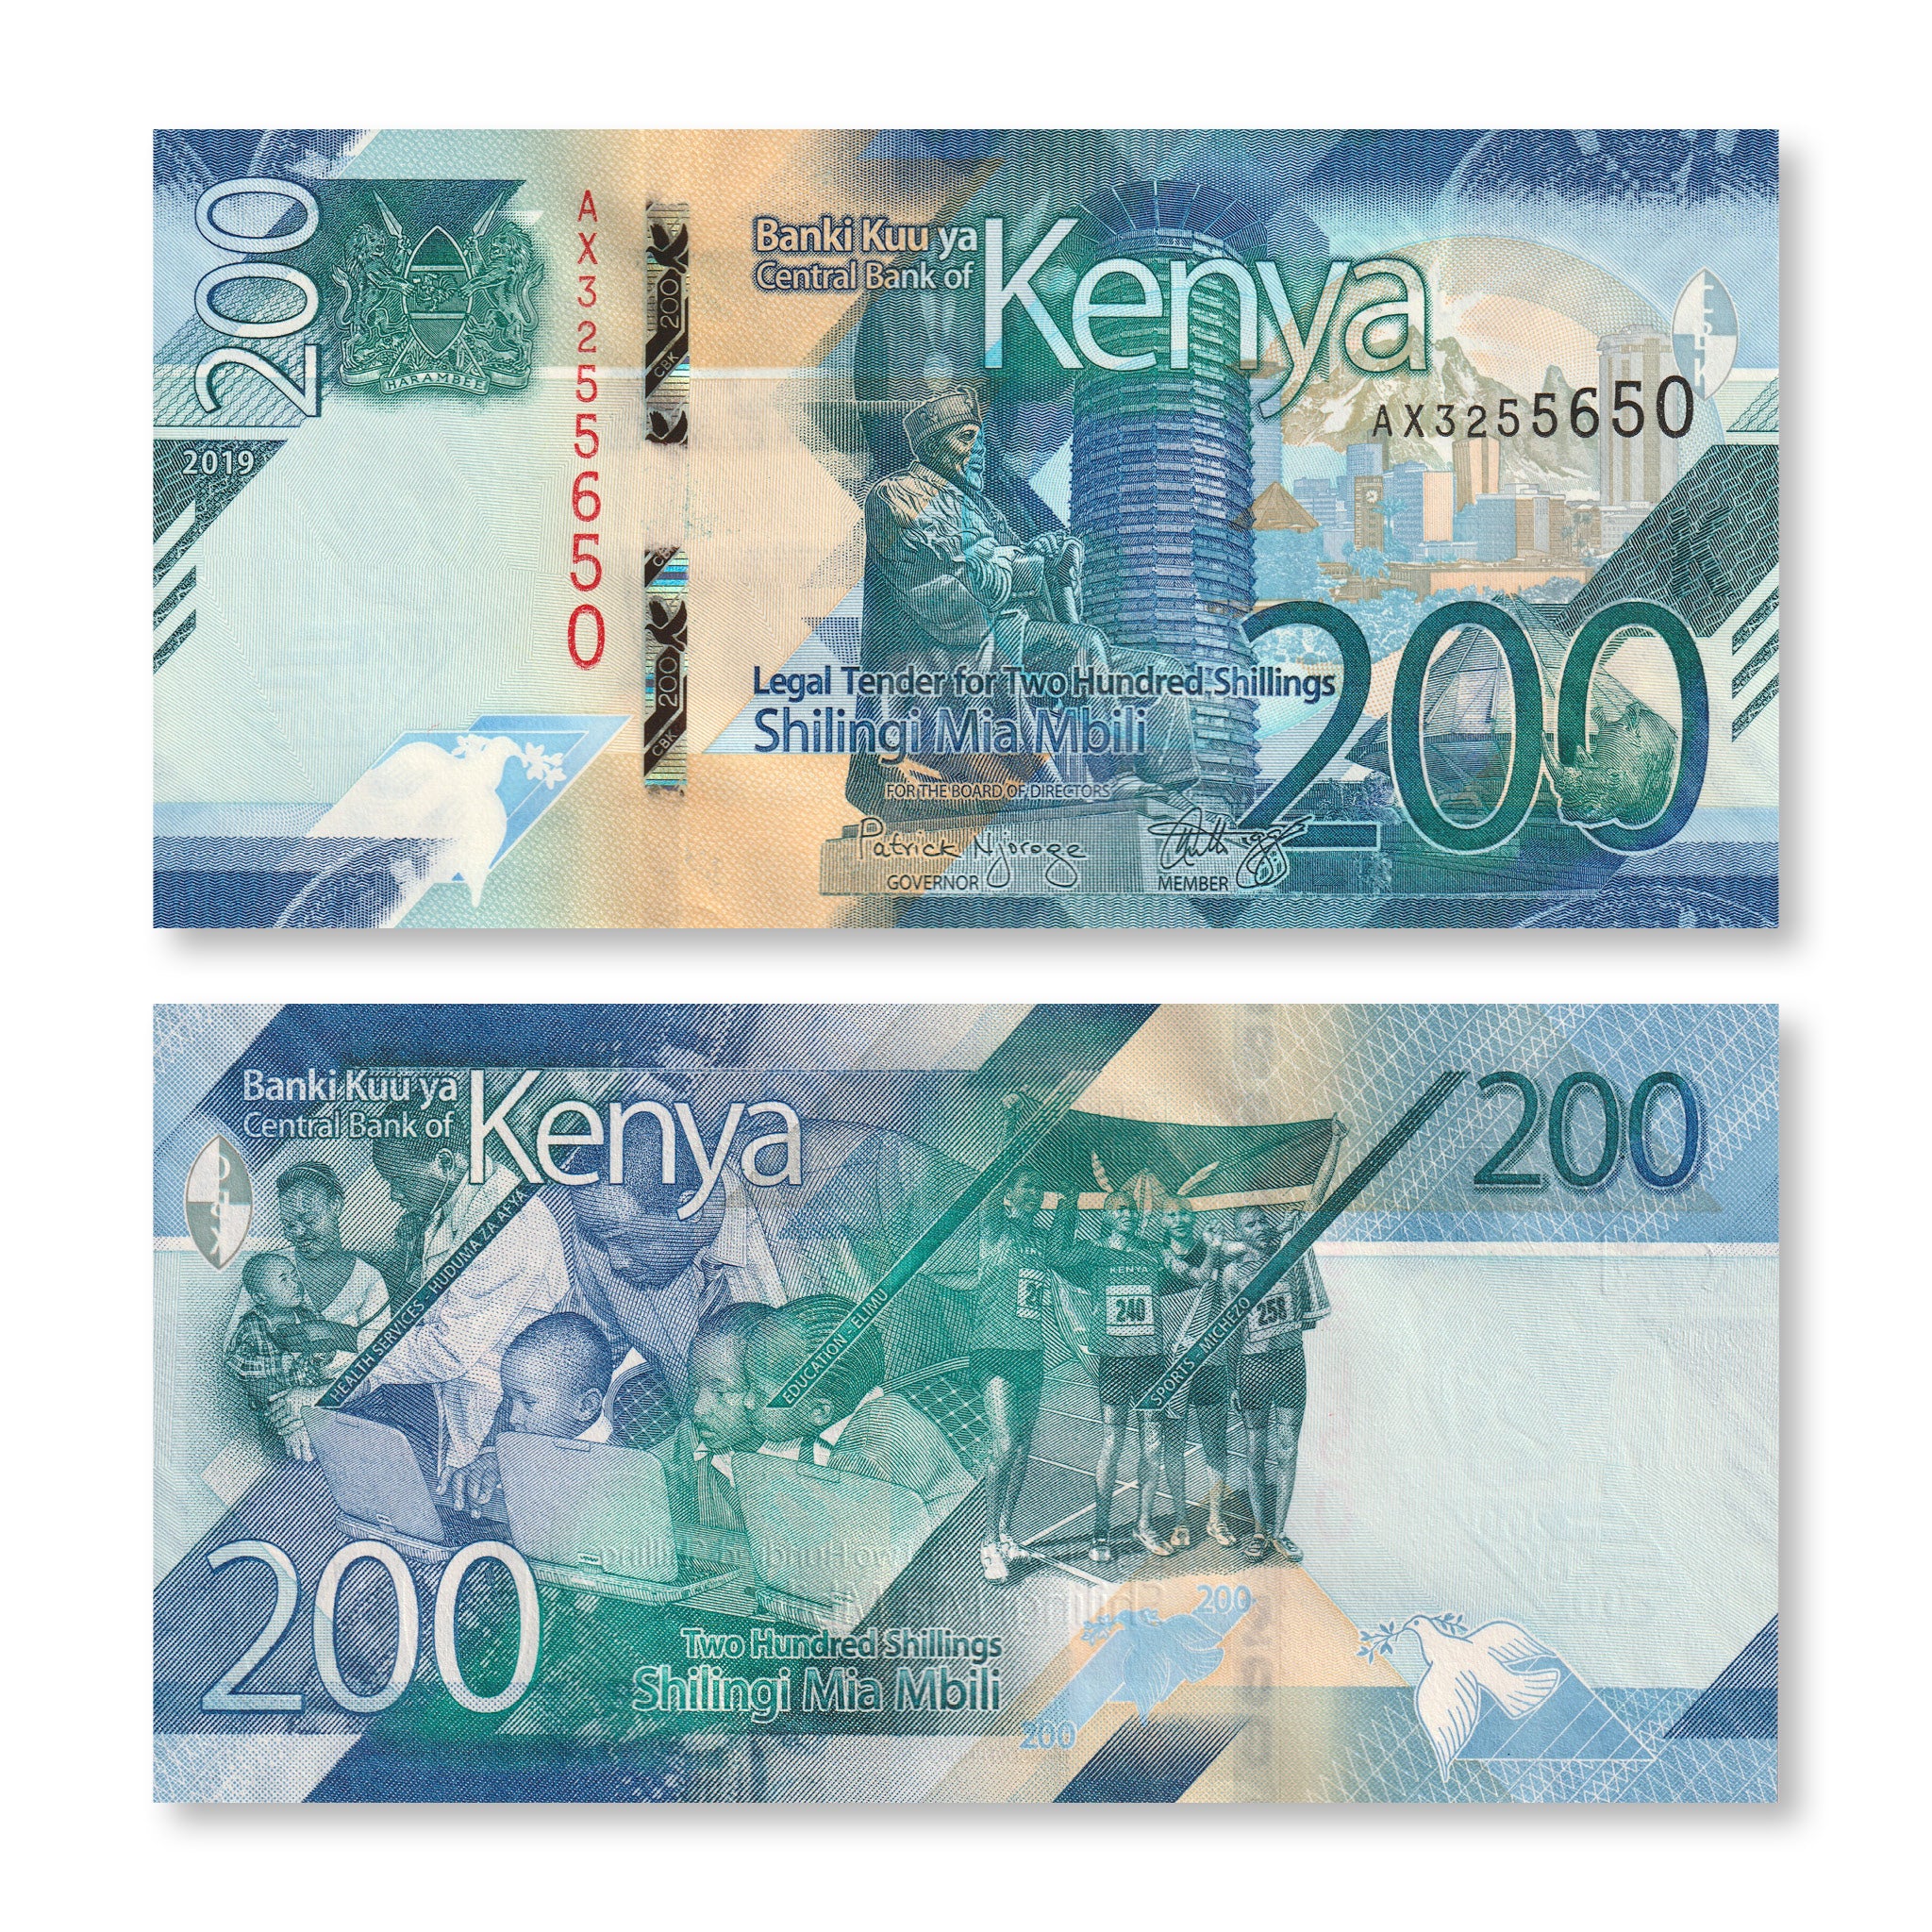 Kenya 200 Shillings, 2019, B146a, UNC - Robert's World Money - World Banknotes